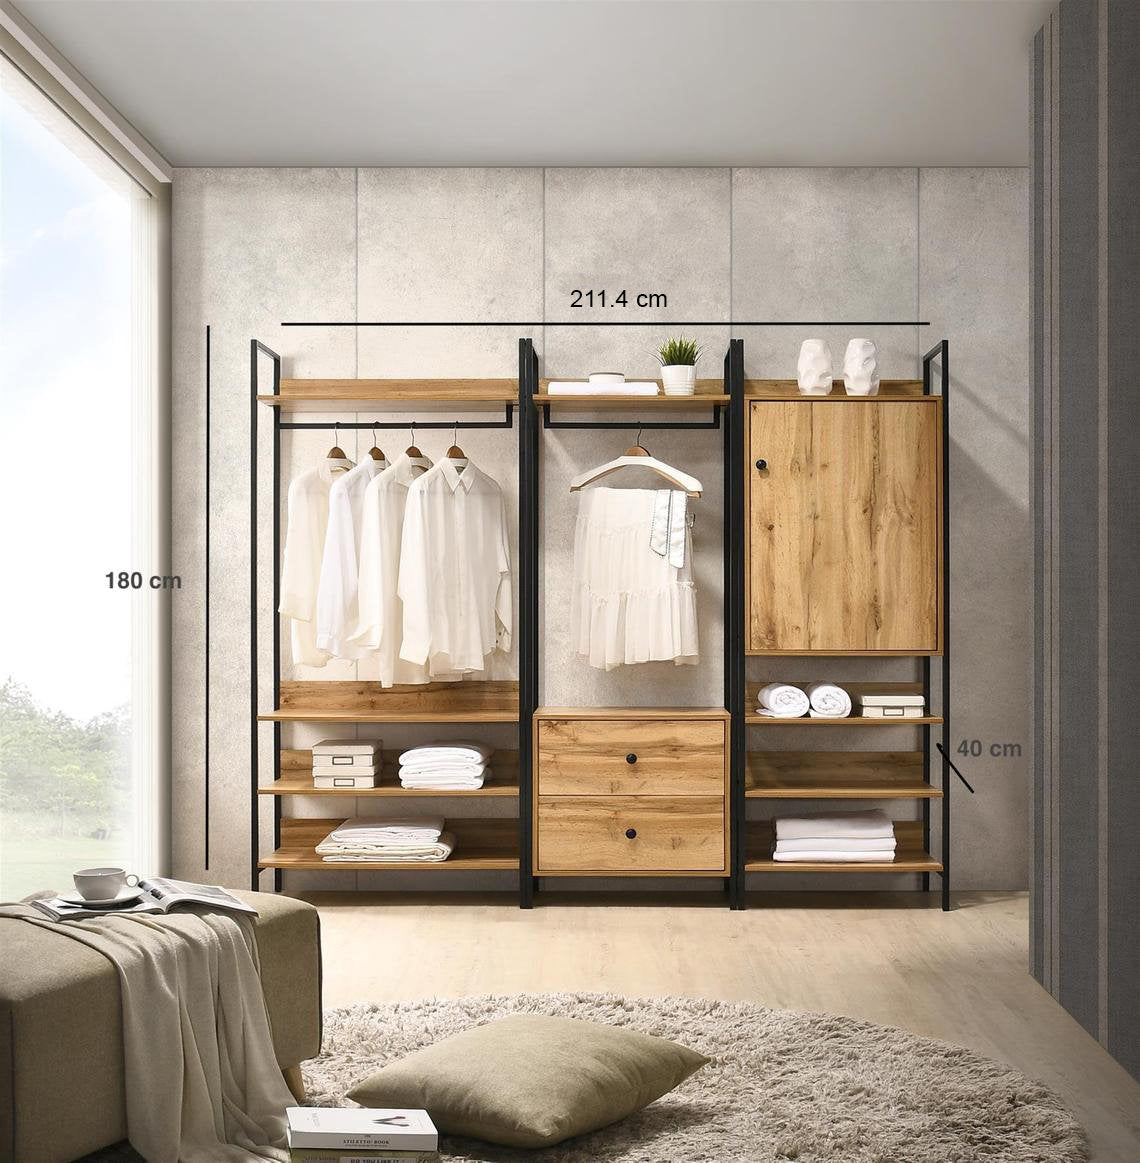 Woburn Open Wardrobe Unit with 2 Drawers Clothing Storage